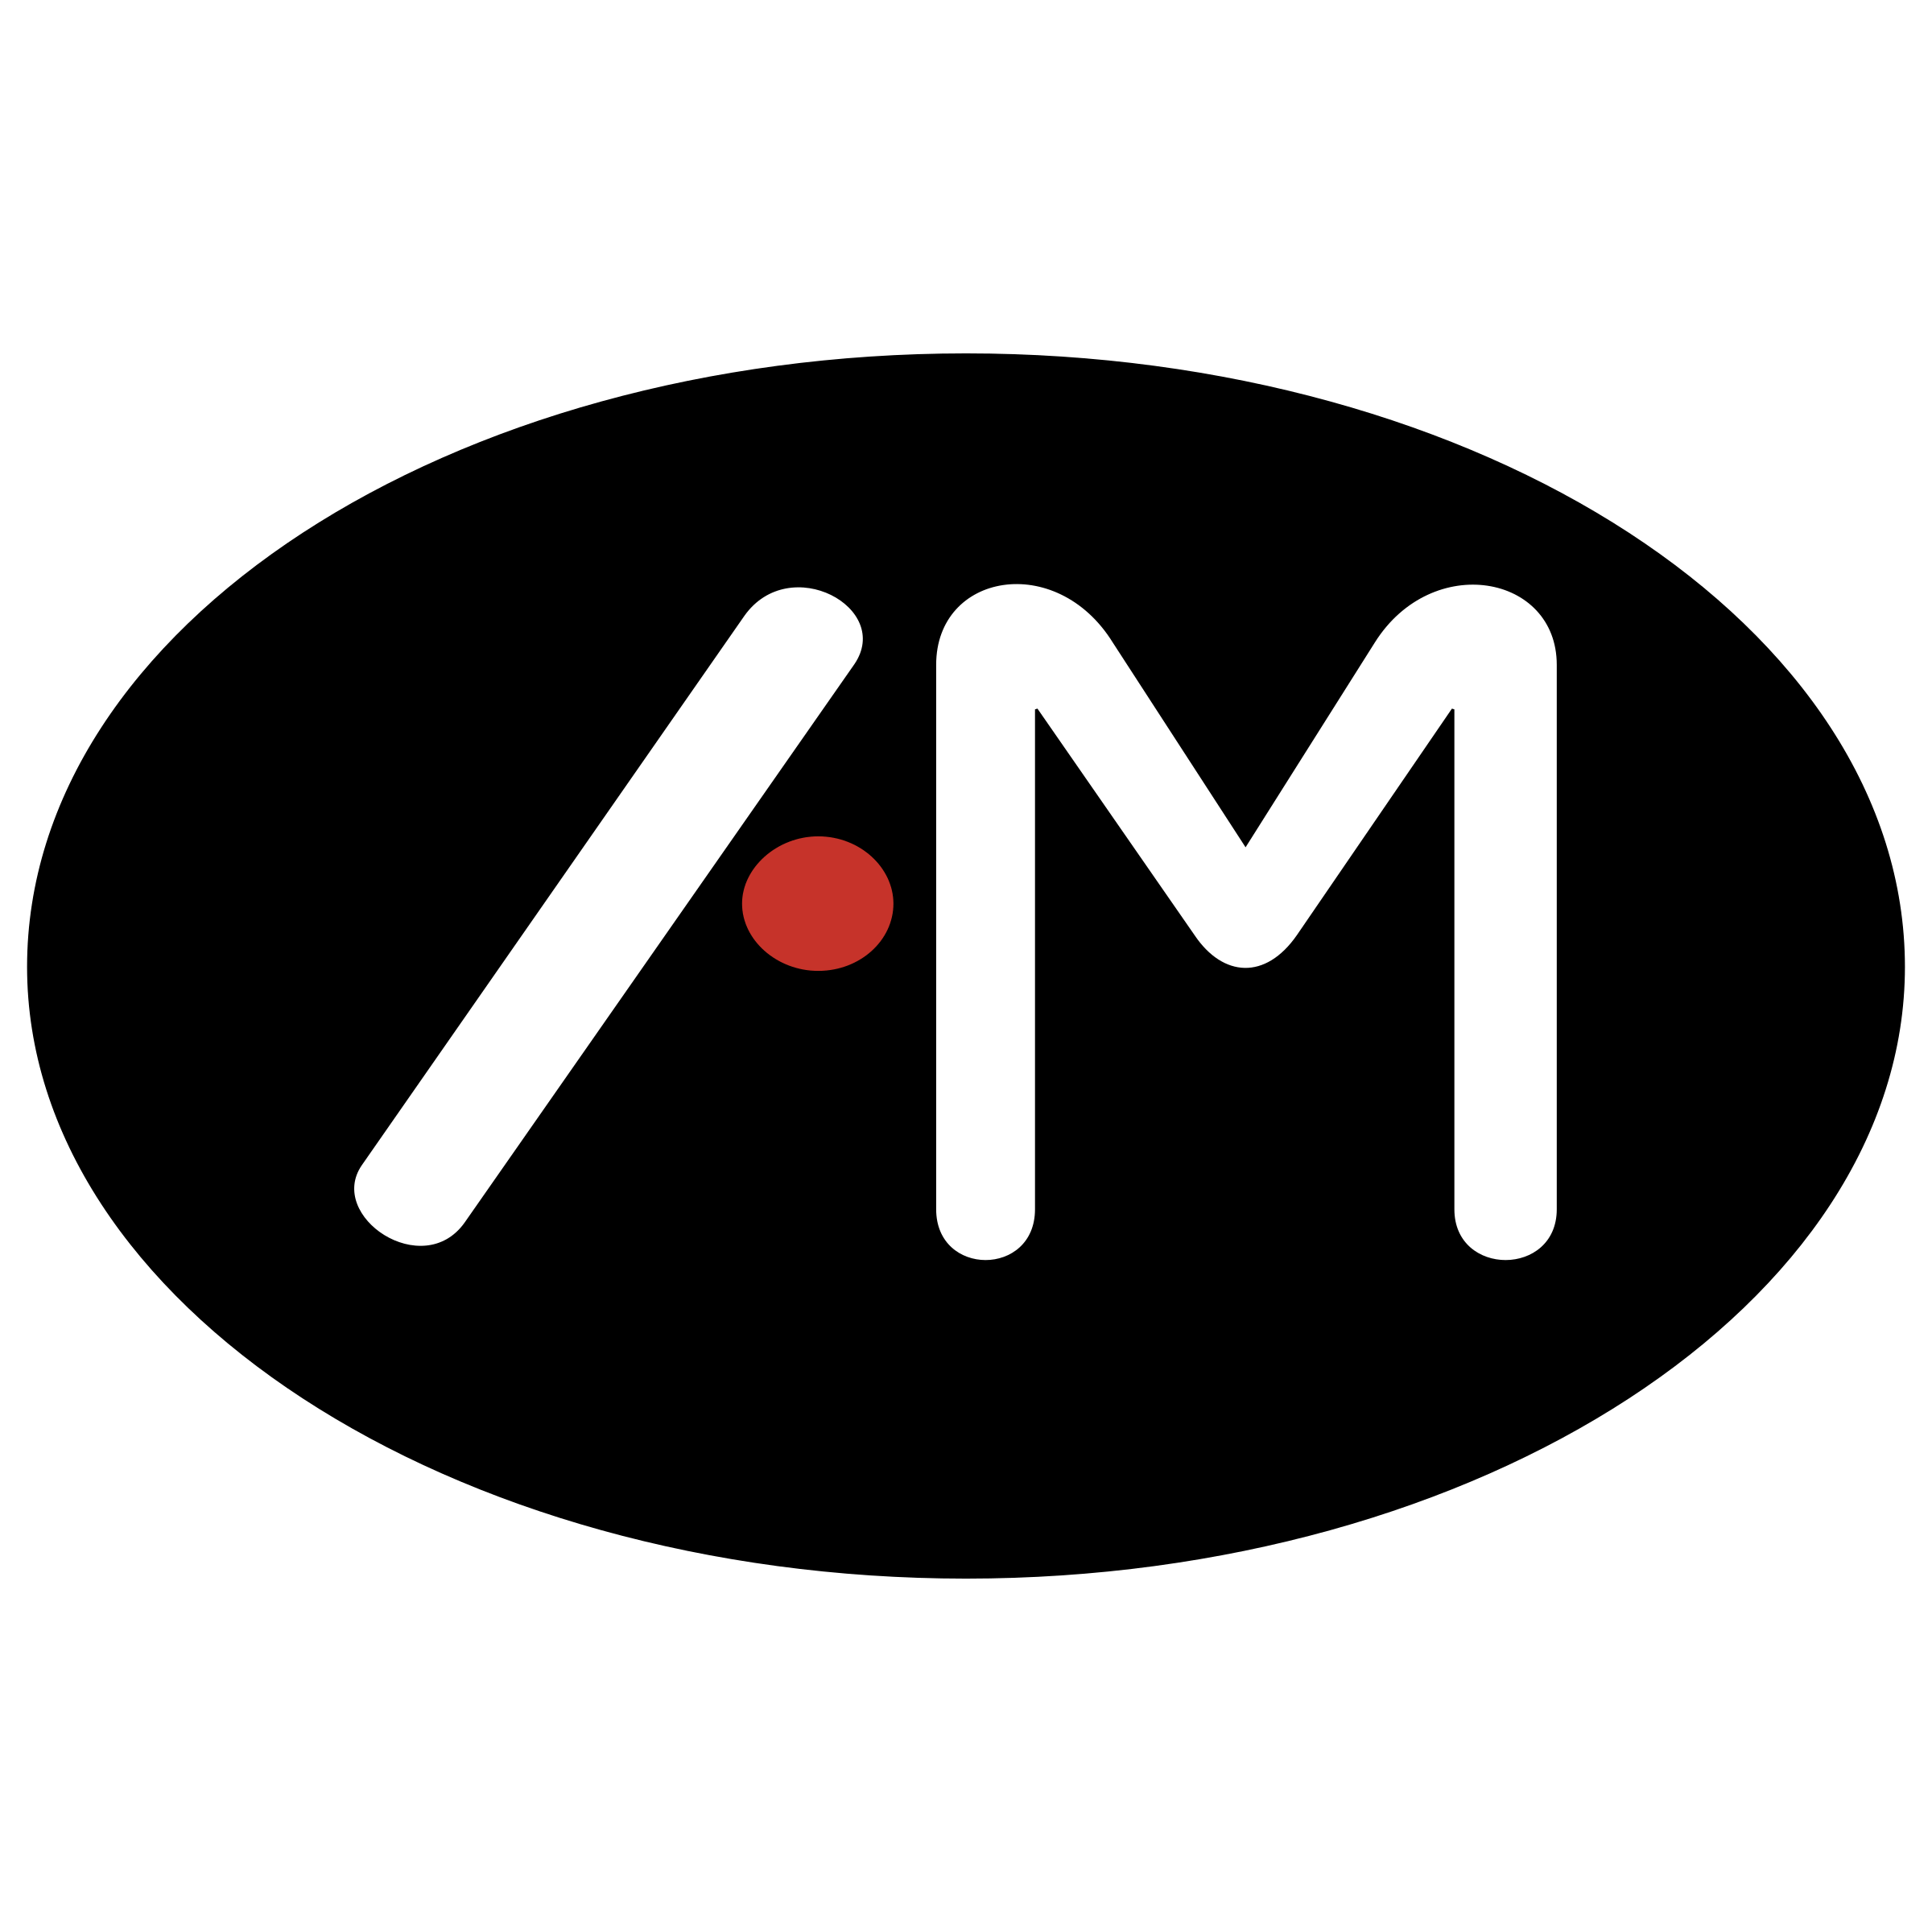 Animax Logo - AnimaX Logo PNG Transparent & SVG Vector - Freebie Supply